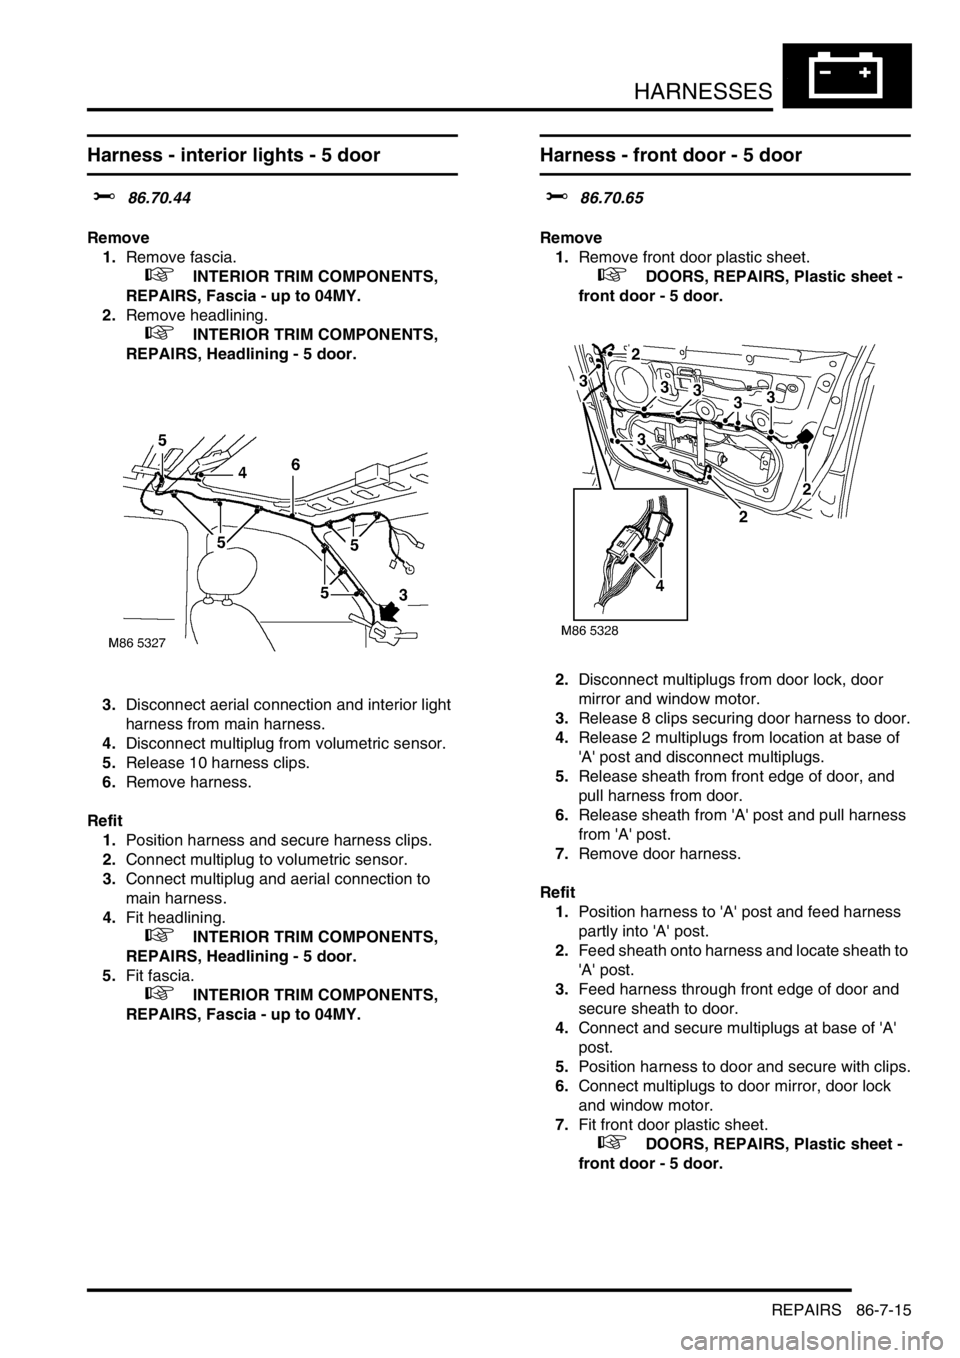 LAND ROVER FREELANDER 2001  Workshop Manual HARNESSES
REPAIRS 86-7-15
Harness - interior lights - 5 door
$% 86.70.44
Remove
1.Remove fascia.
 
 +  INTERIOR TRIM COMPONENTS, 
REPAIRS, Fascia - up to 04MY.
2.Remove headlining.
 
 +  INTERIOR TRIM